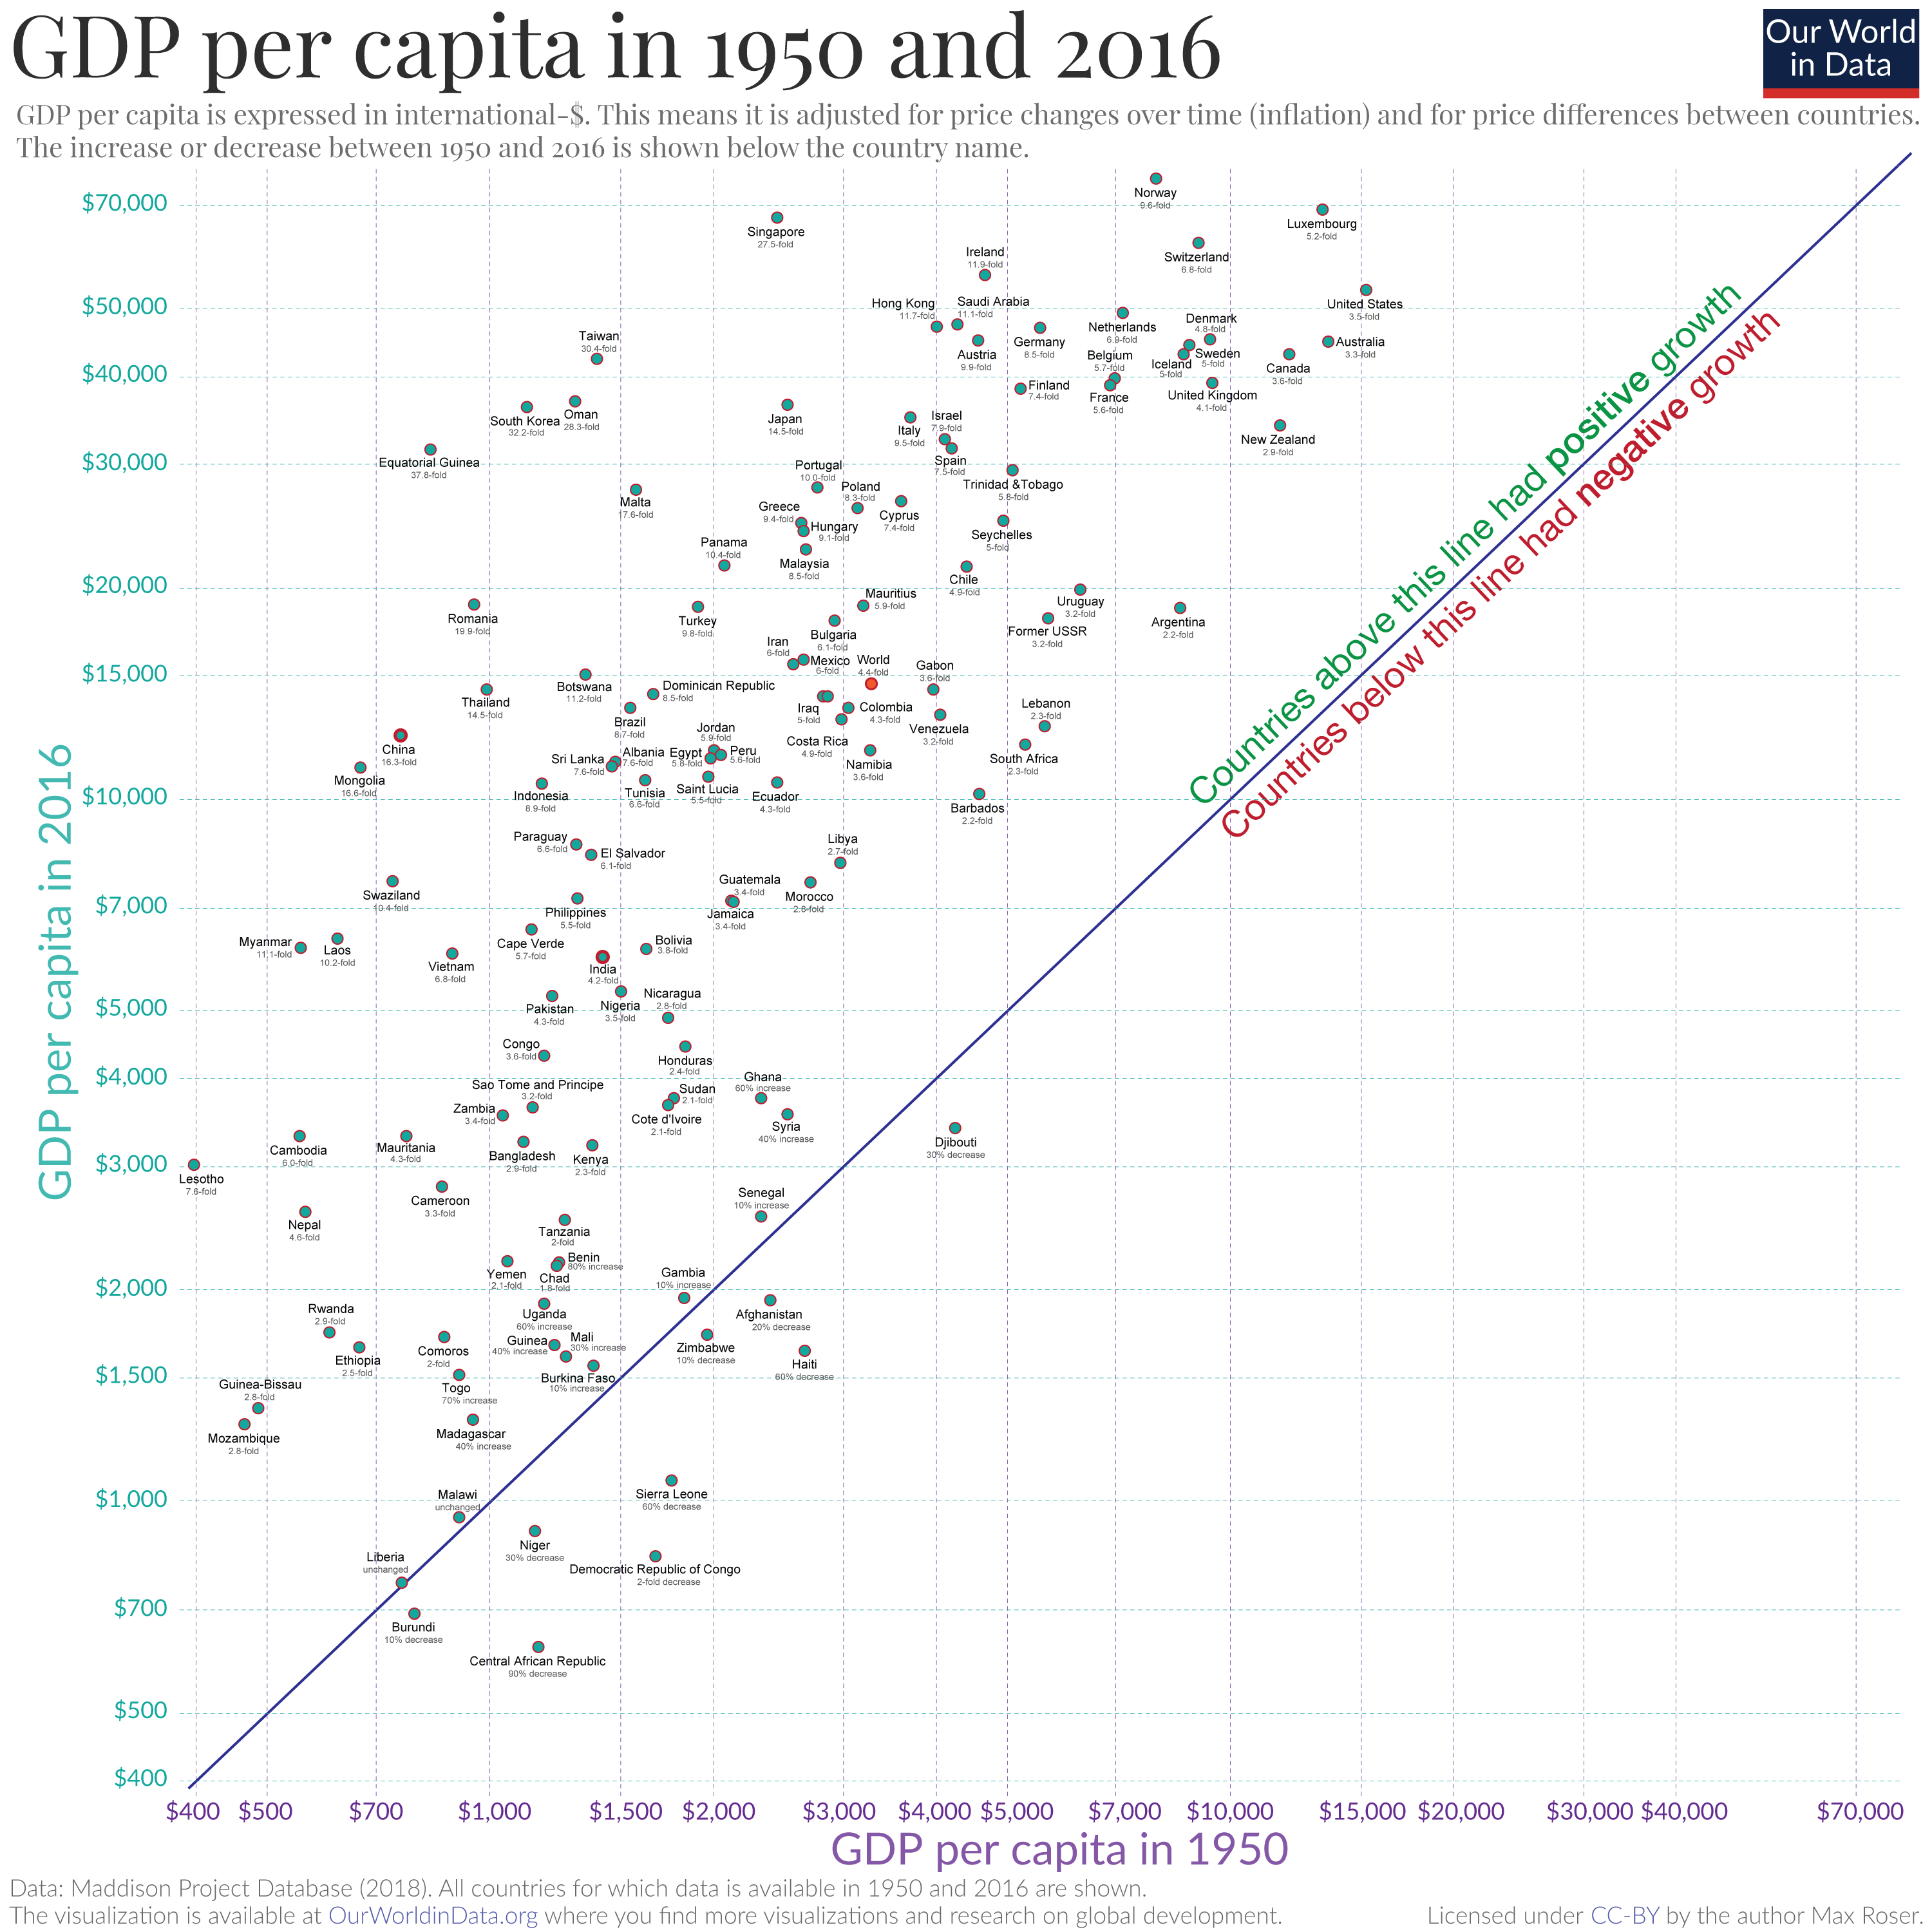 Economic Growth Chart Since 1900